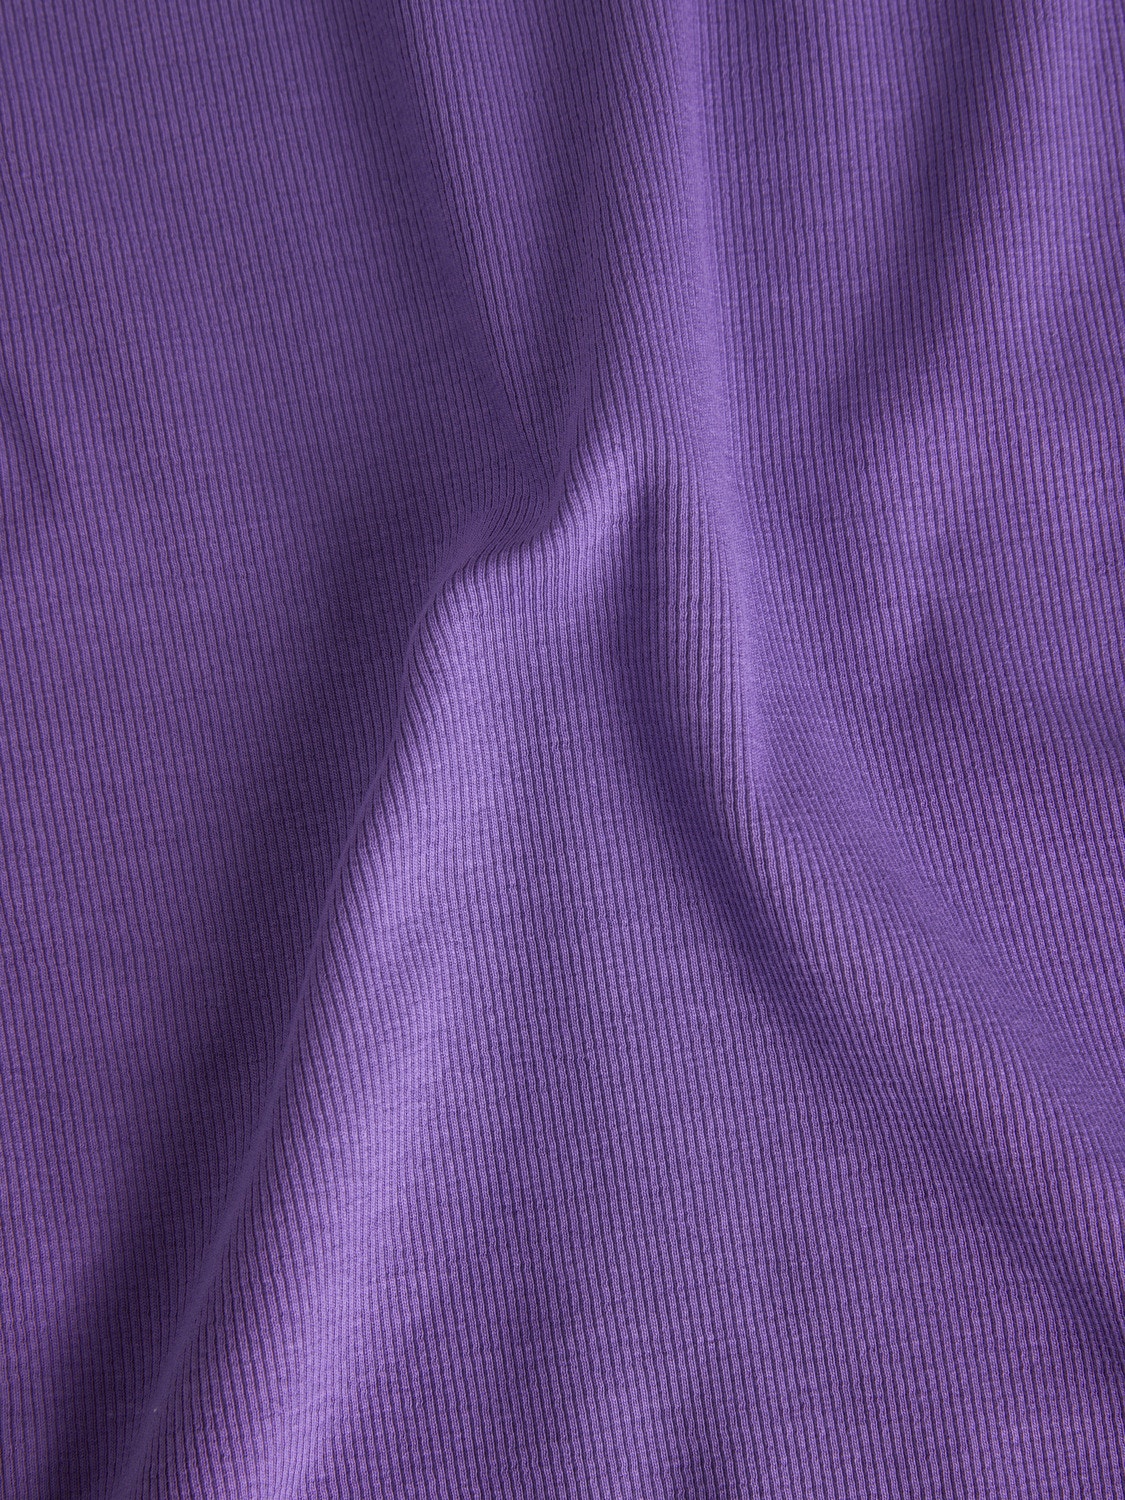 JJXX JXFOREST Kleid -Royal Lilac - 12224660